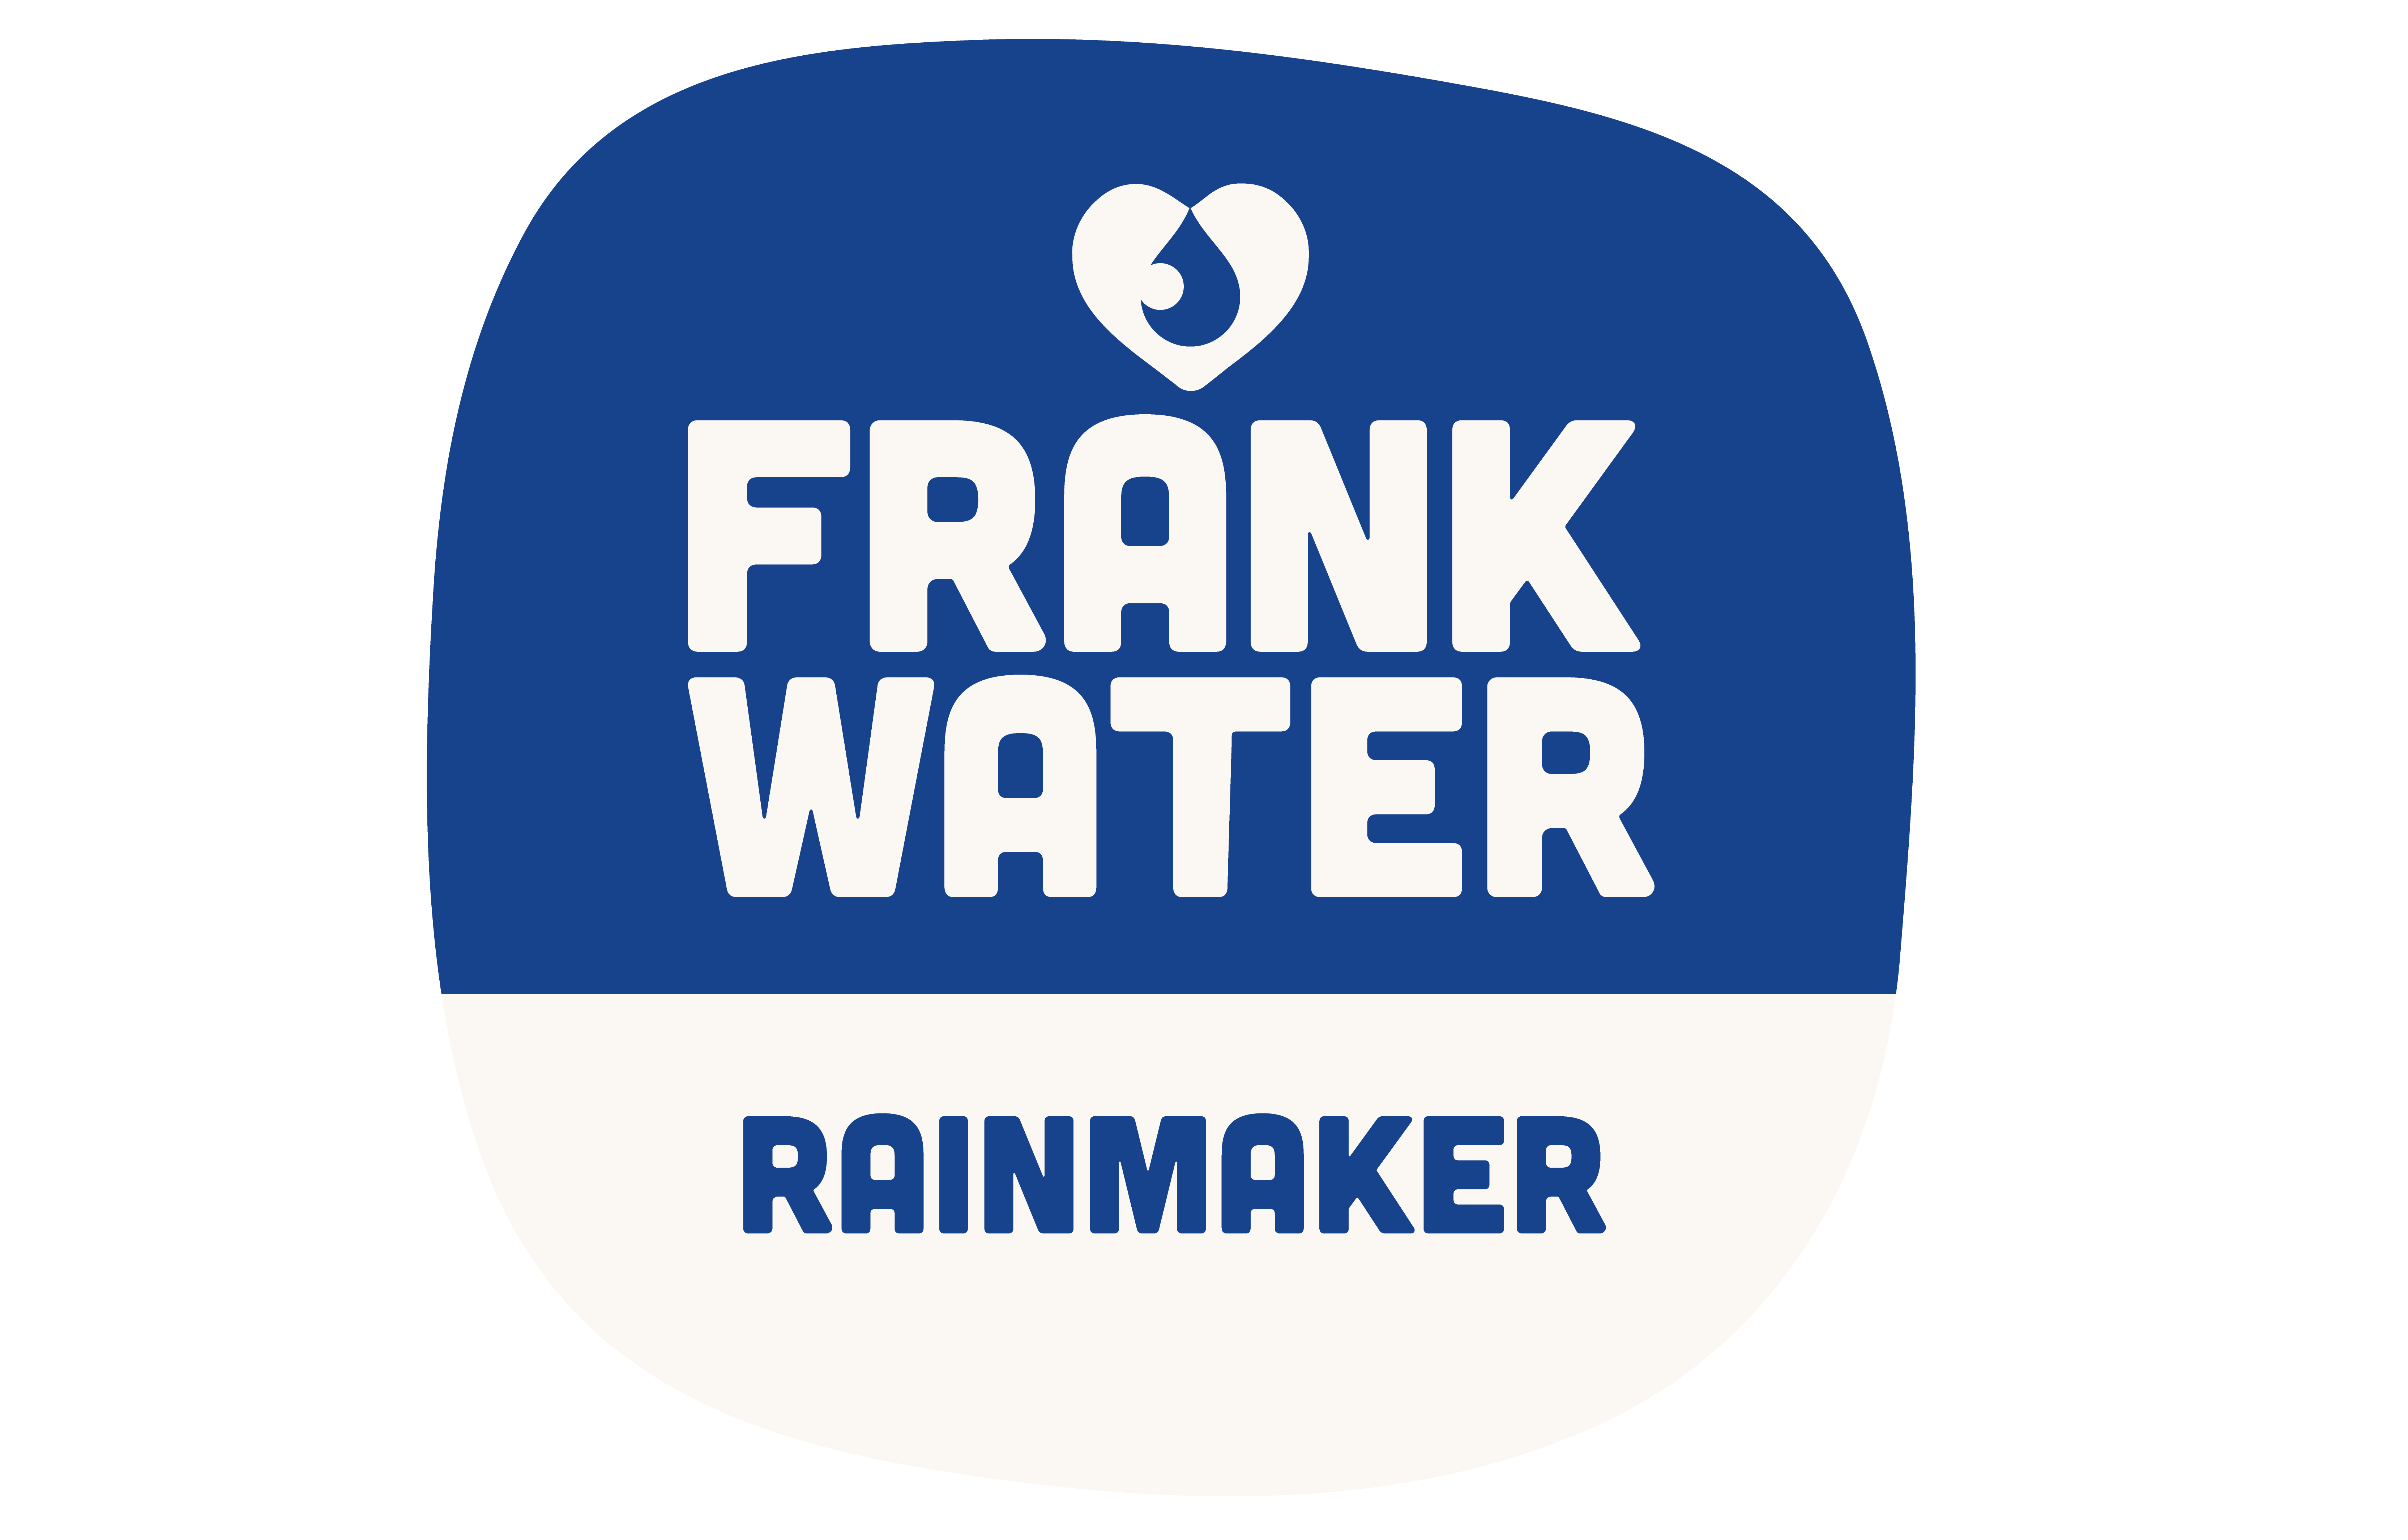 The Frank Water Rainmaker Club